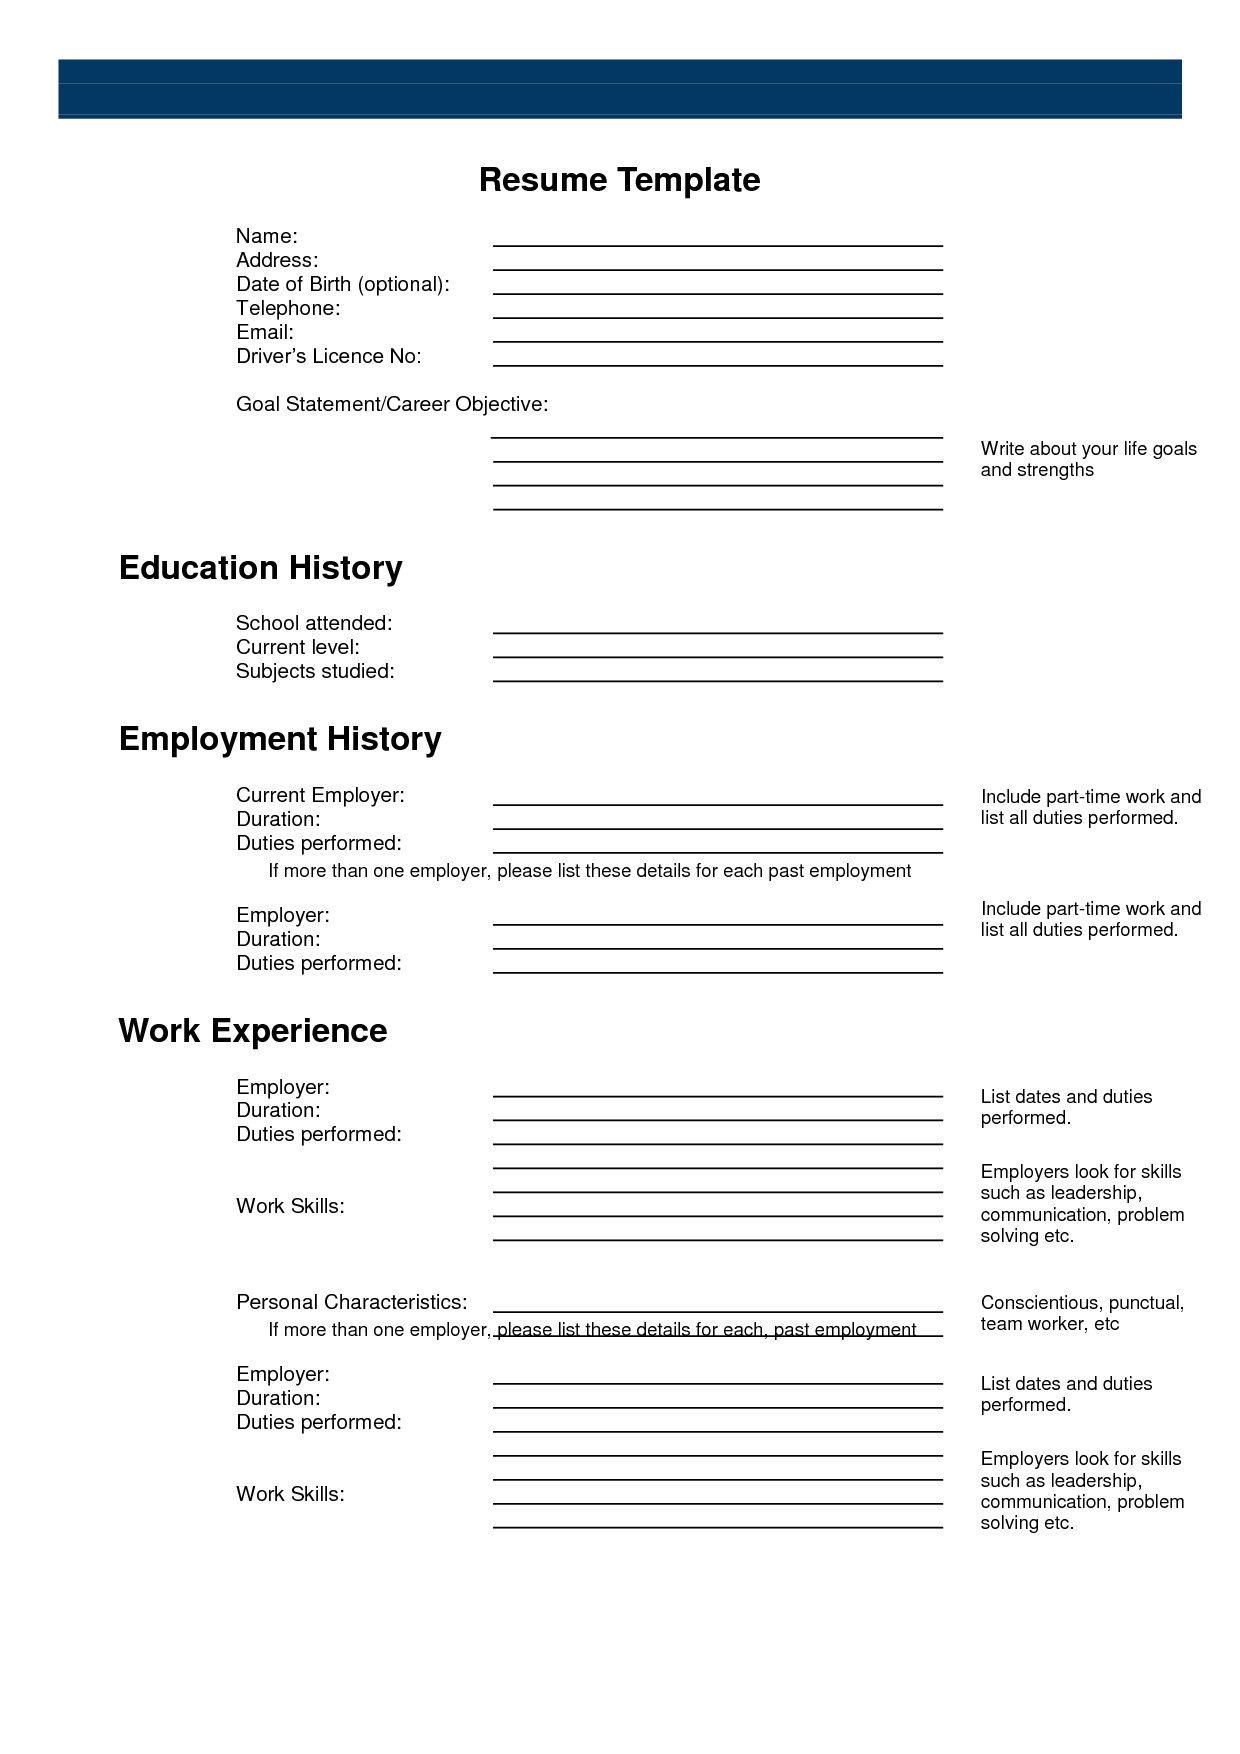 Resume Templates Online Free Printable - Free Resume Creator Online - Free Printable Resume